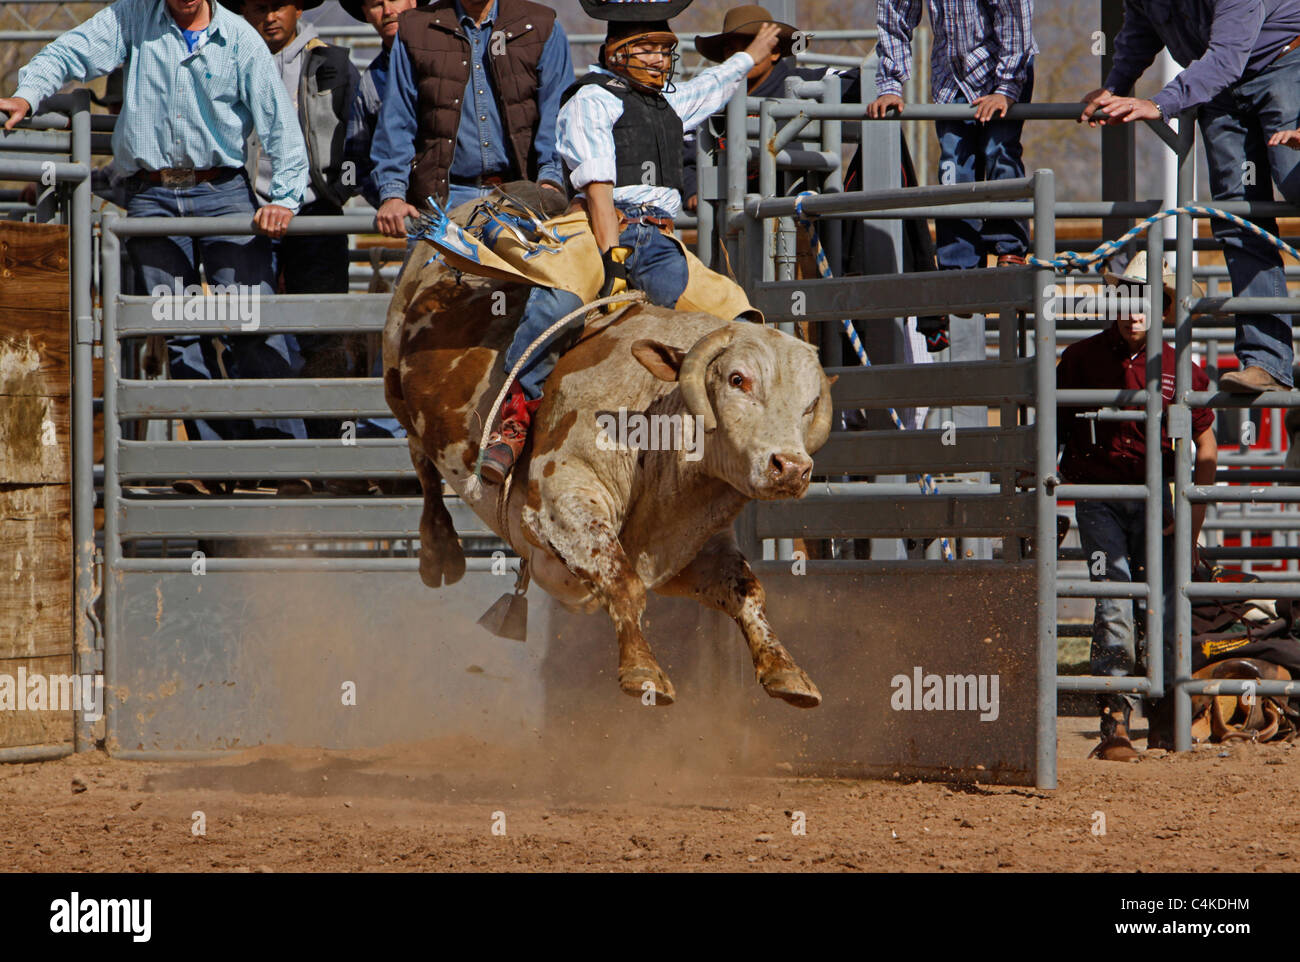 young bull rider in an Arizona rodeo in Phoenix, Arizona Stock Photo